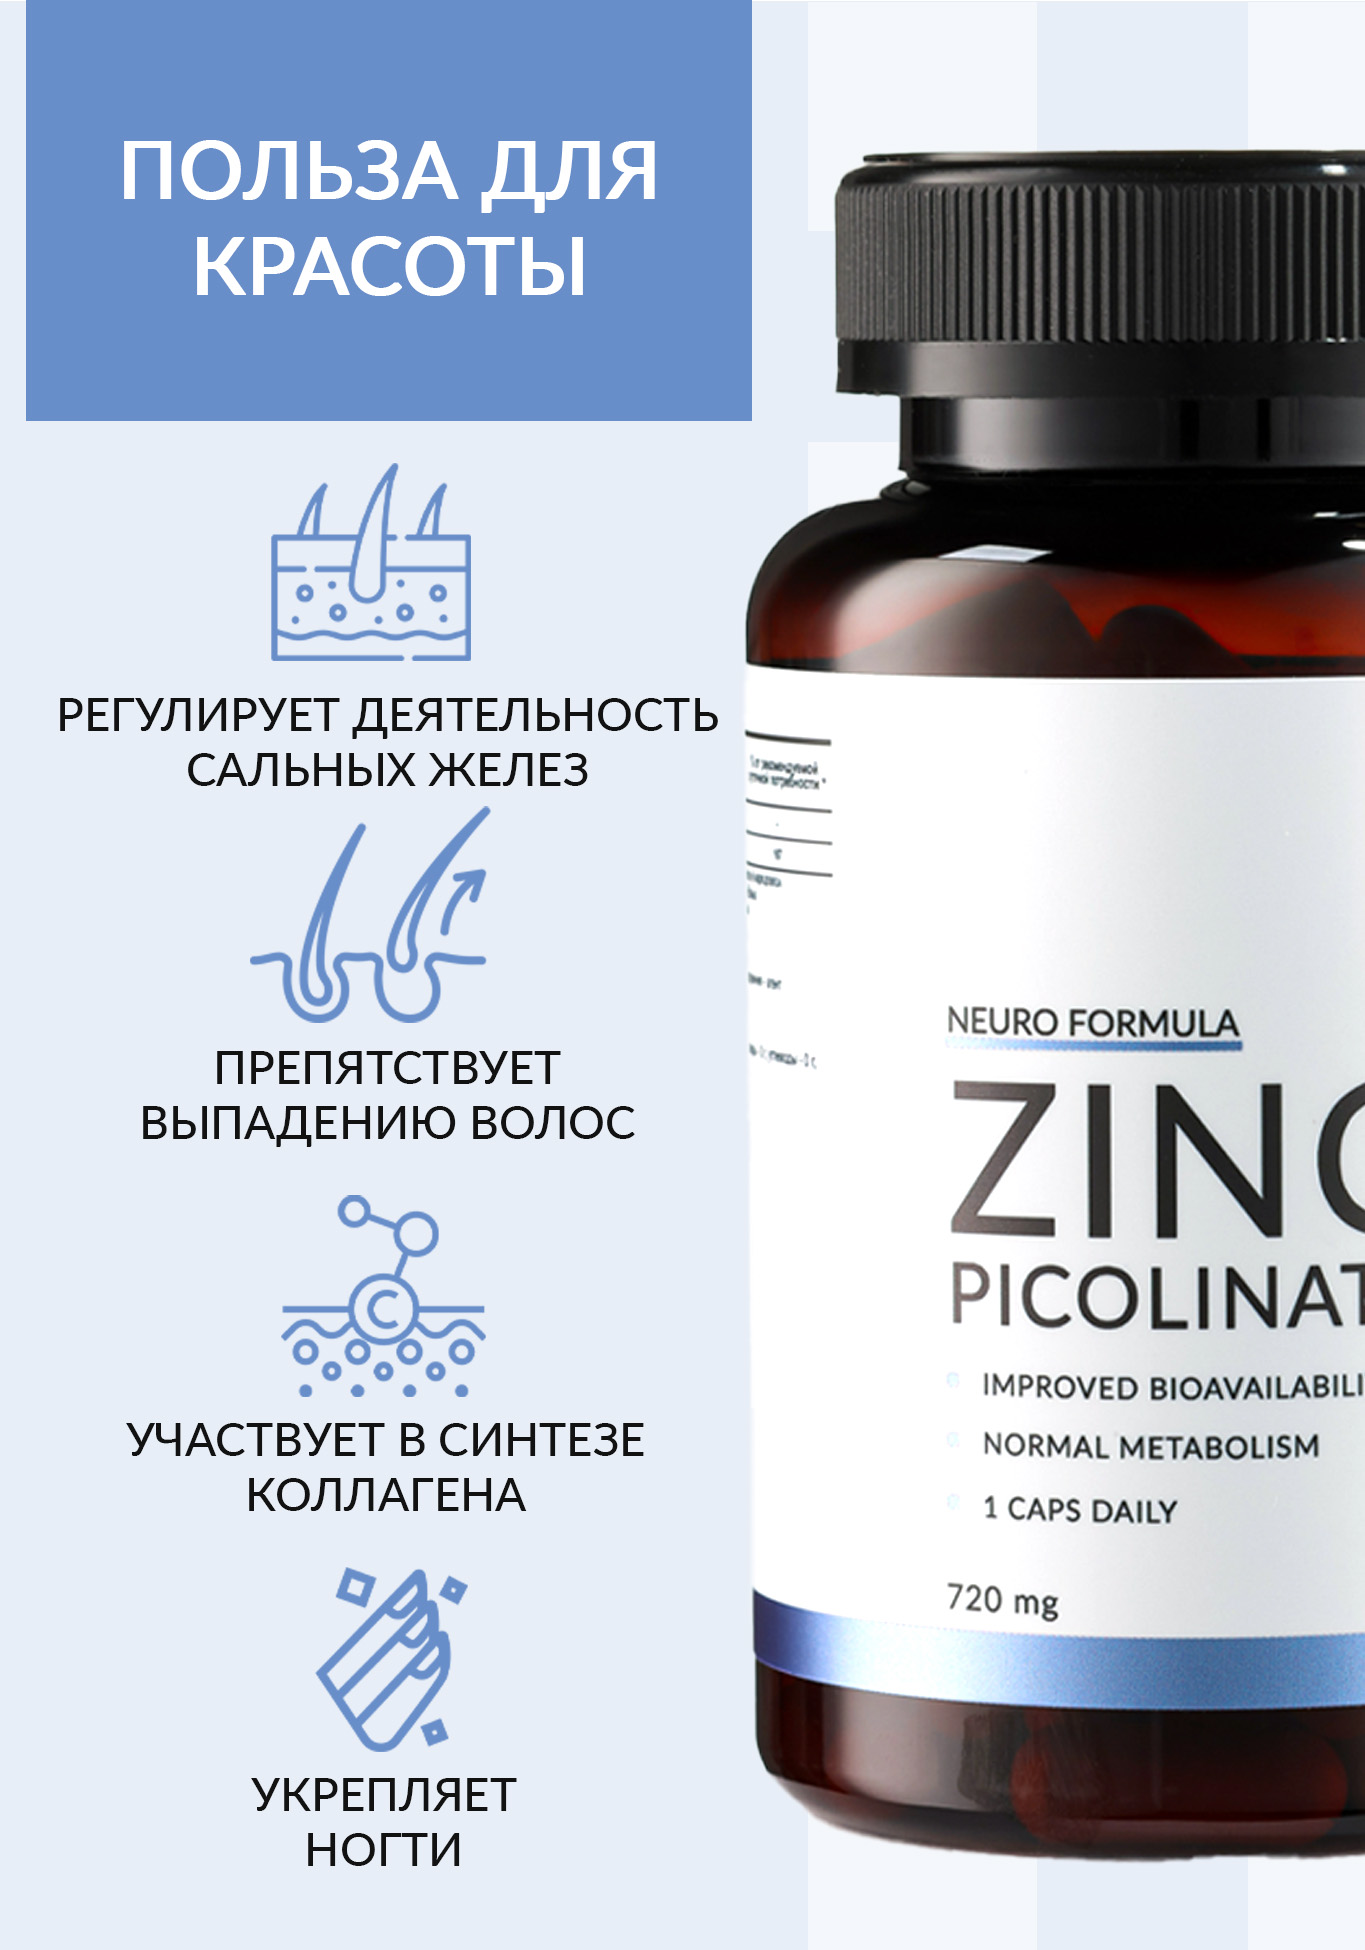 Zink picolinate (Пиколинат цинка) NUTRIPOLIS - фото 2